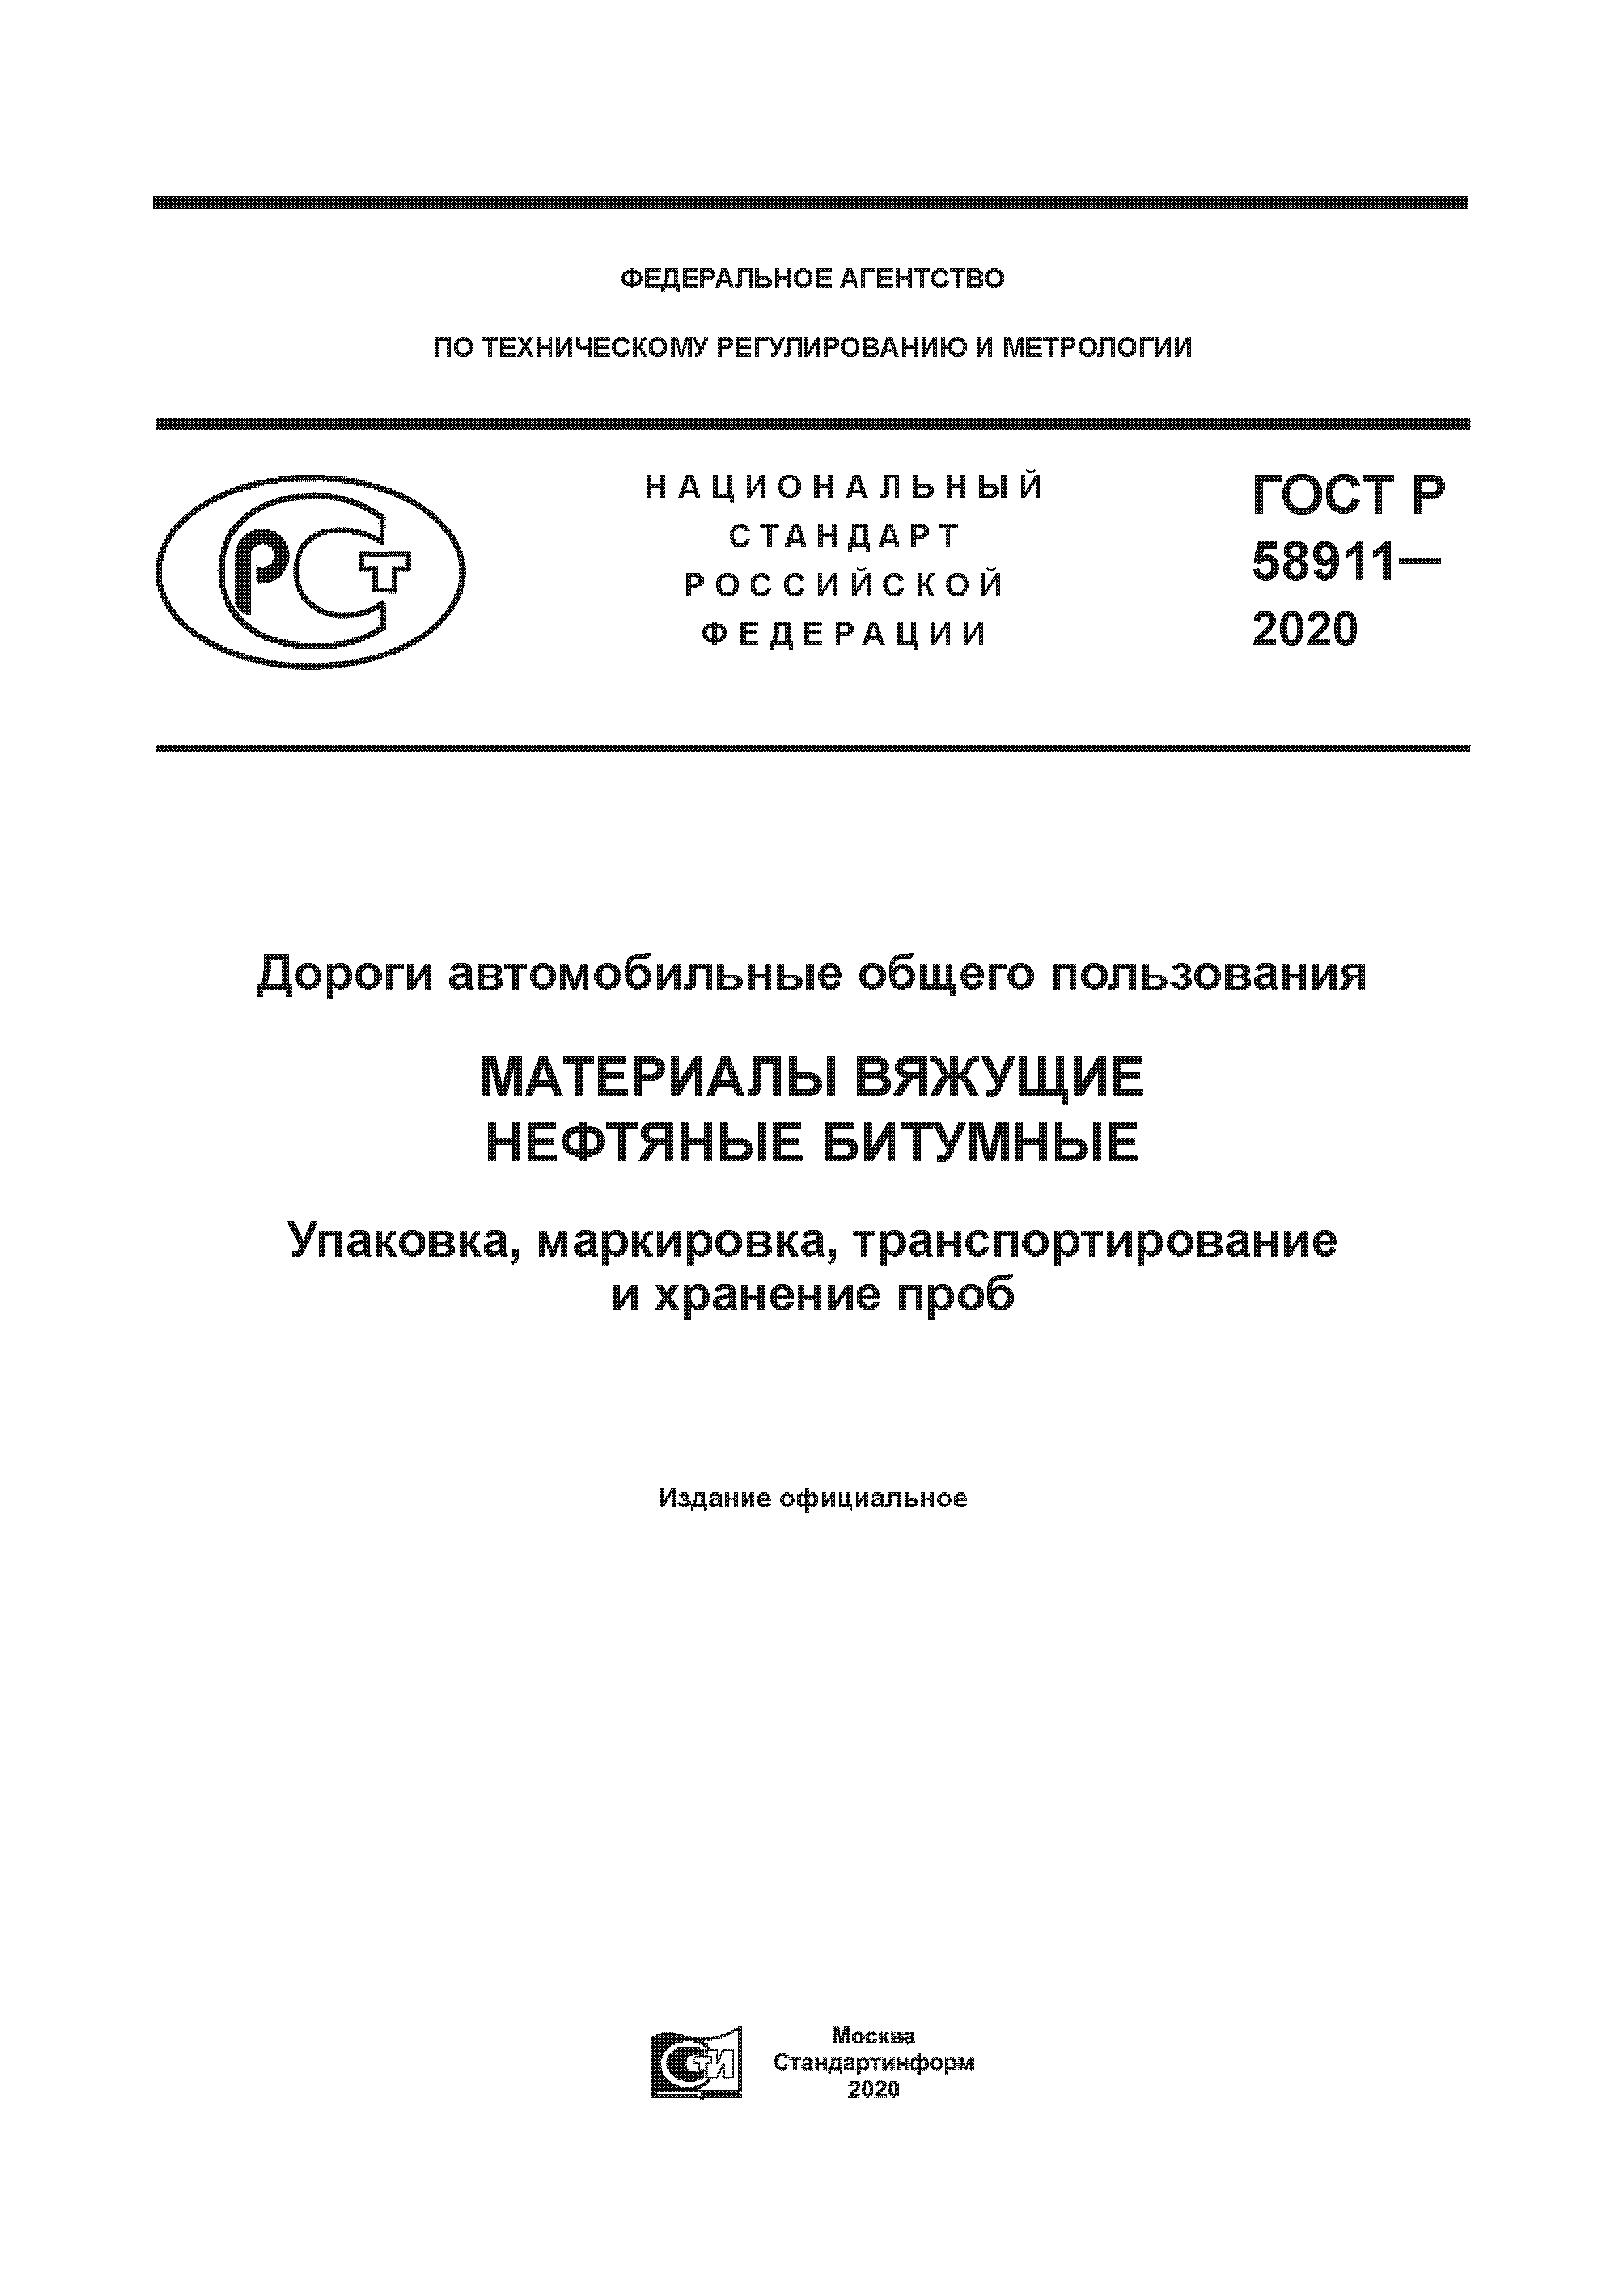 ГОСТ Р 58911-2020